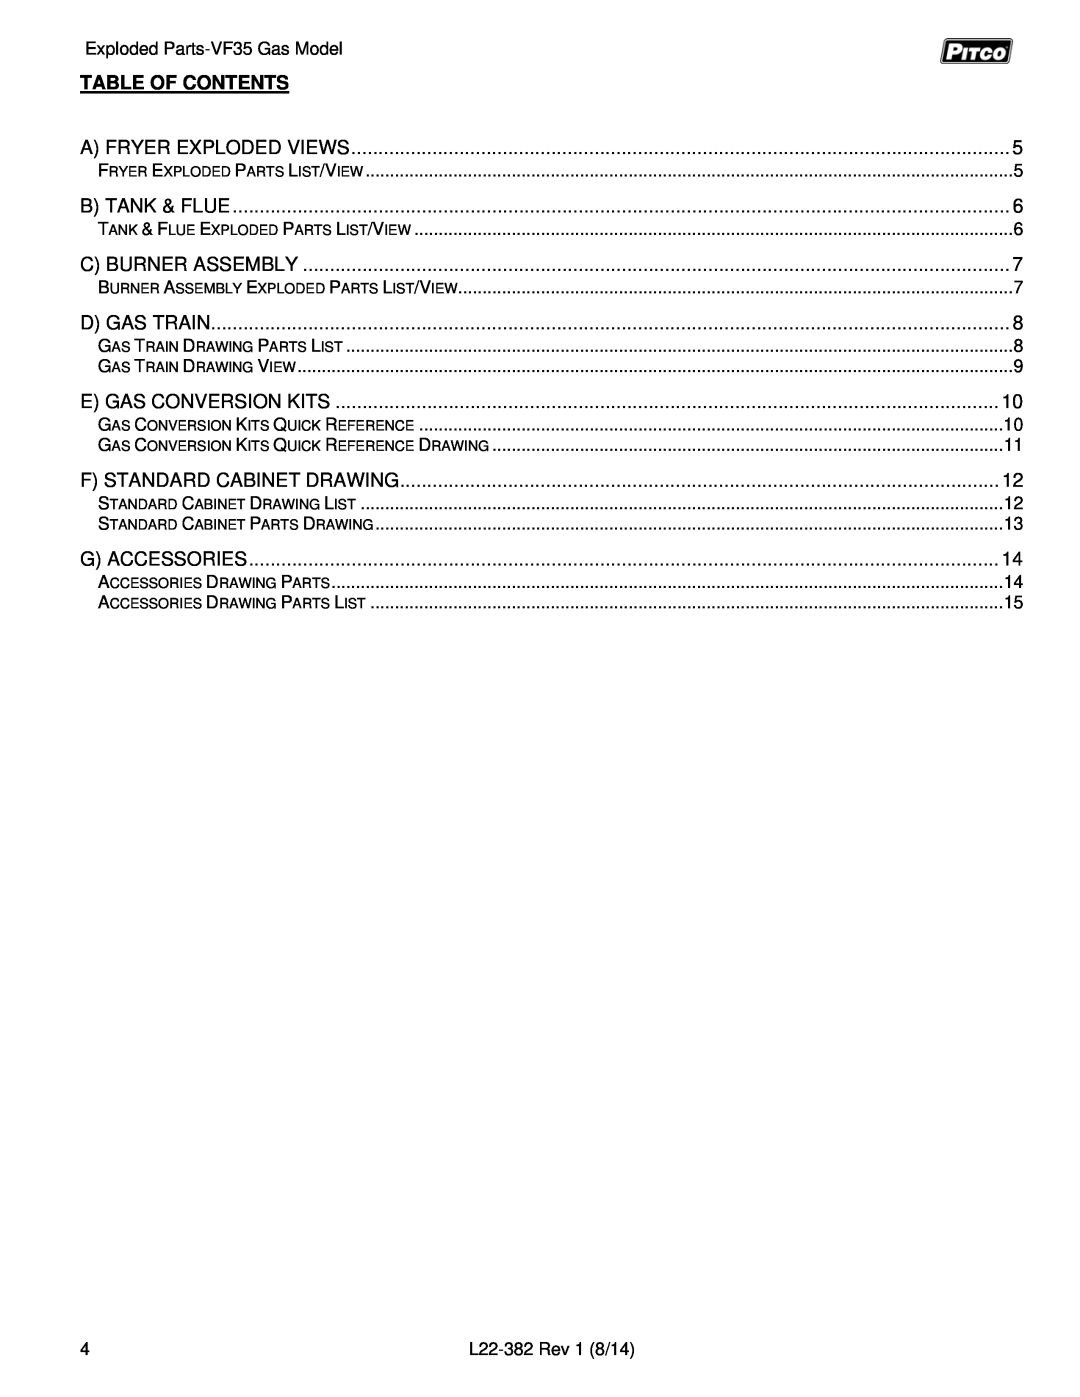 Pitco Frialator VF35 manual Table Of Contents 